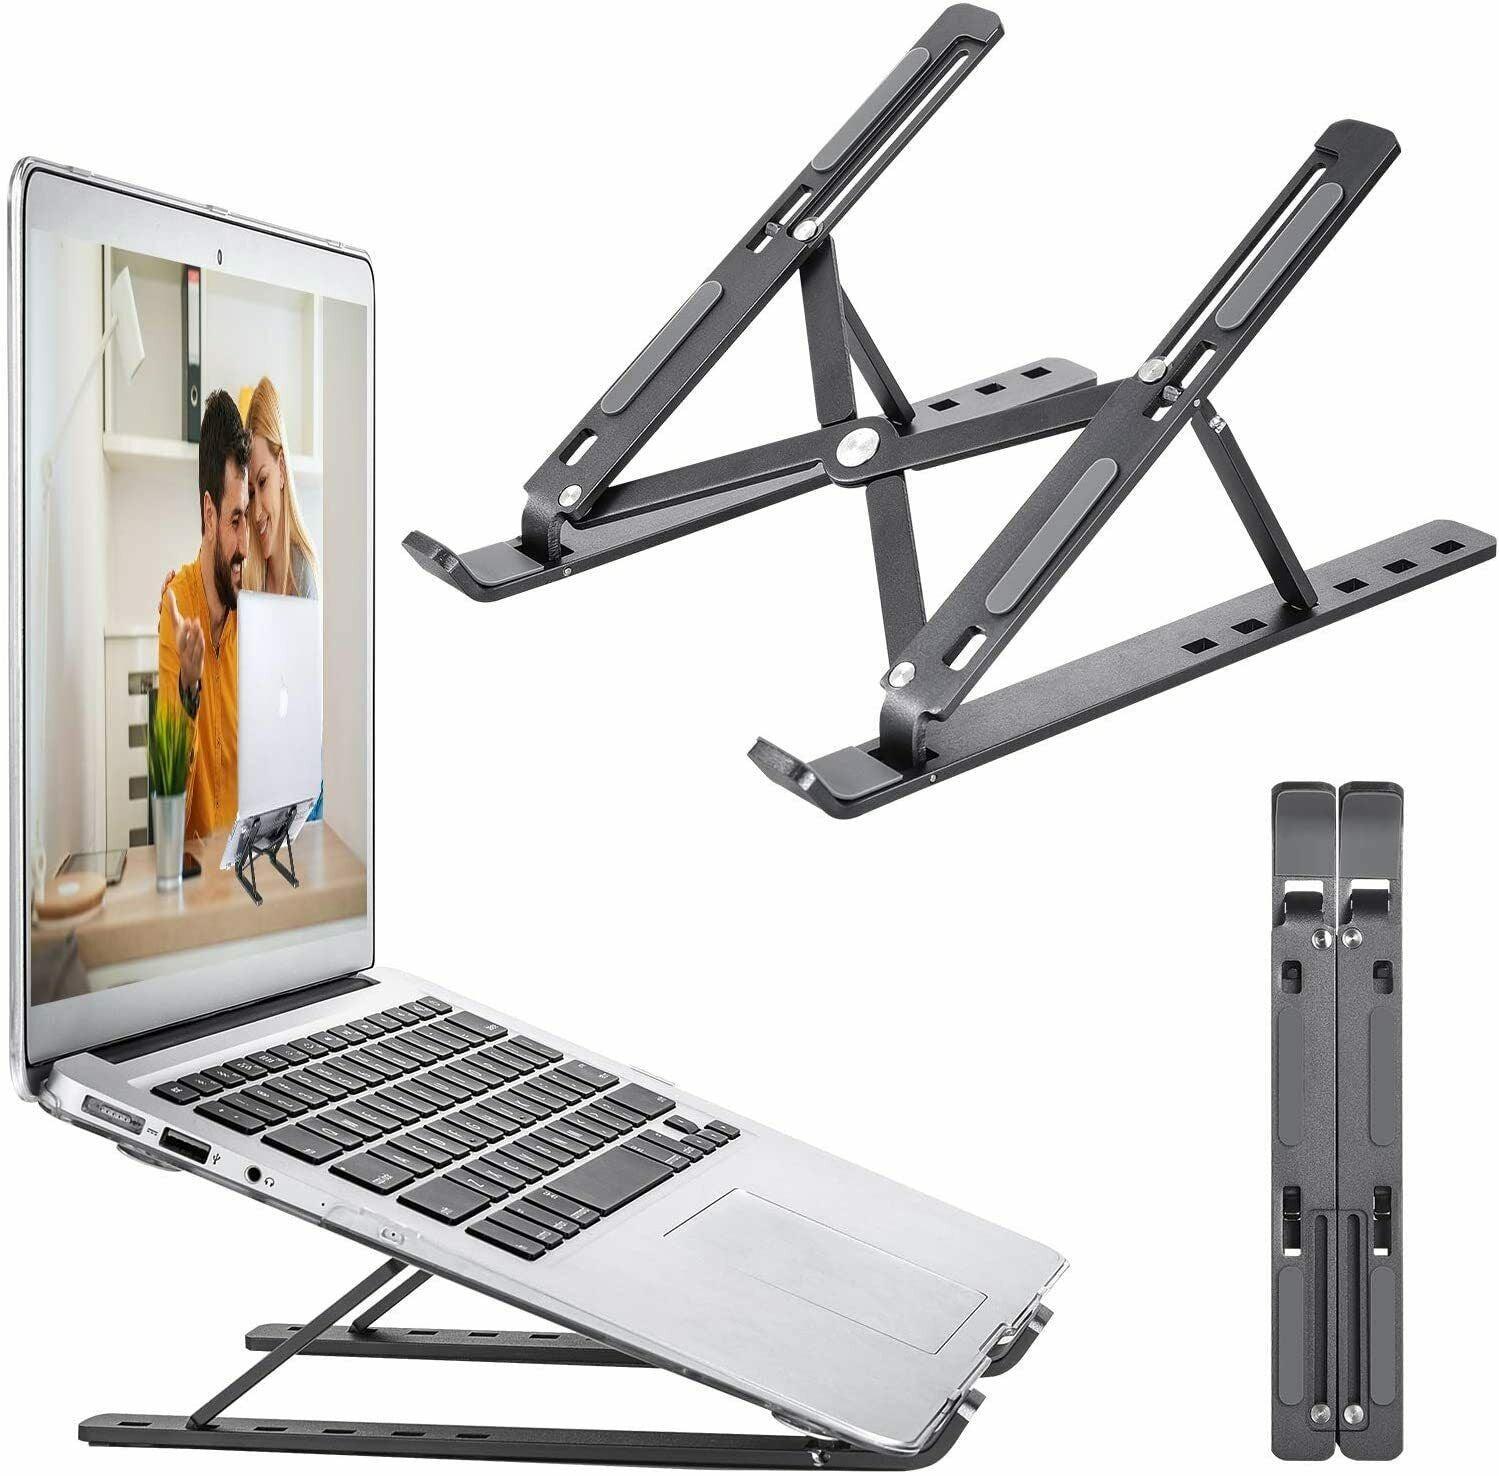 Adjustable Folding Stand Notebook Portable Tablet Holder For Laptop iPad MacBook-Black-1 PACK